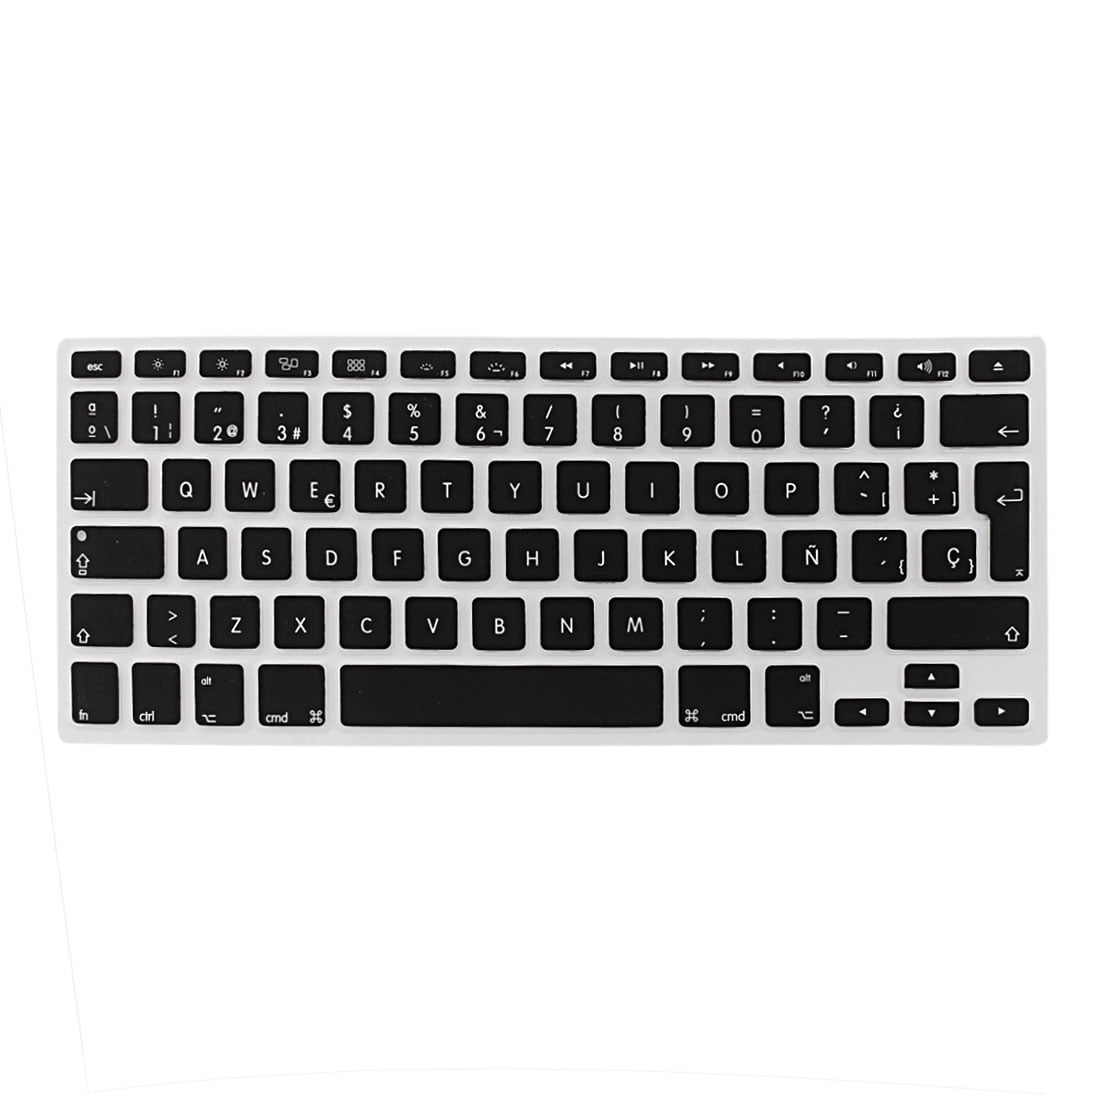 Shimmering Ocean Blue Keyboard Cover Skin for Apple Macbook Pro 13" 15"17" 